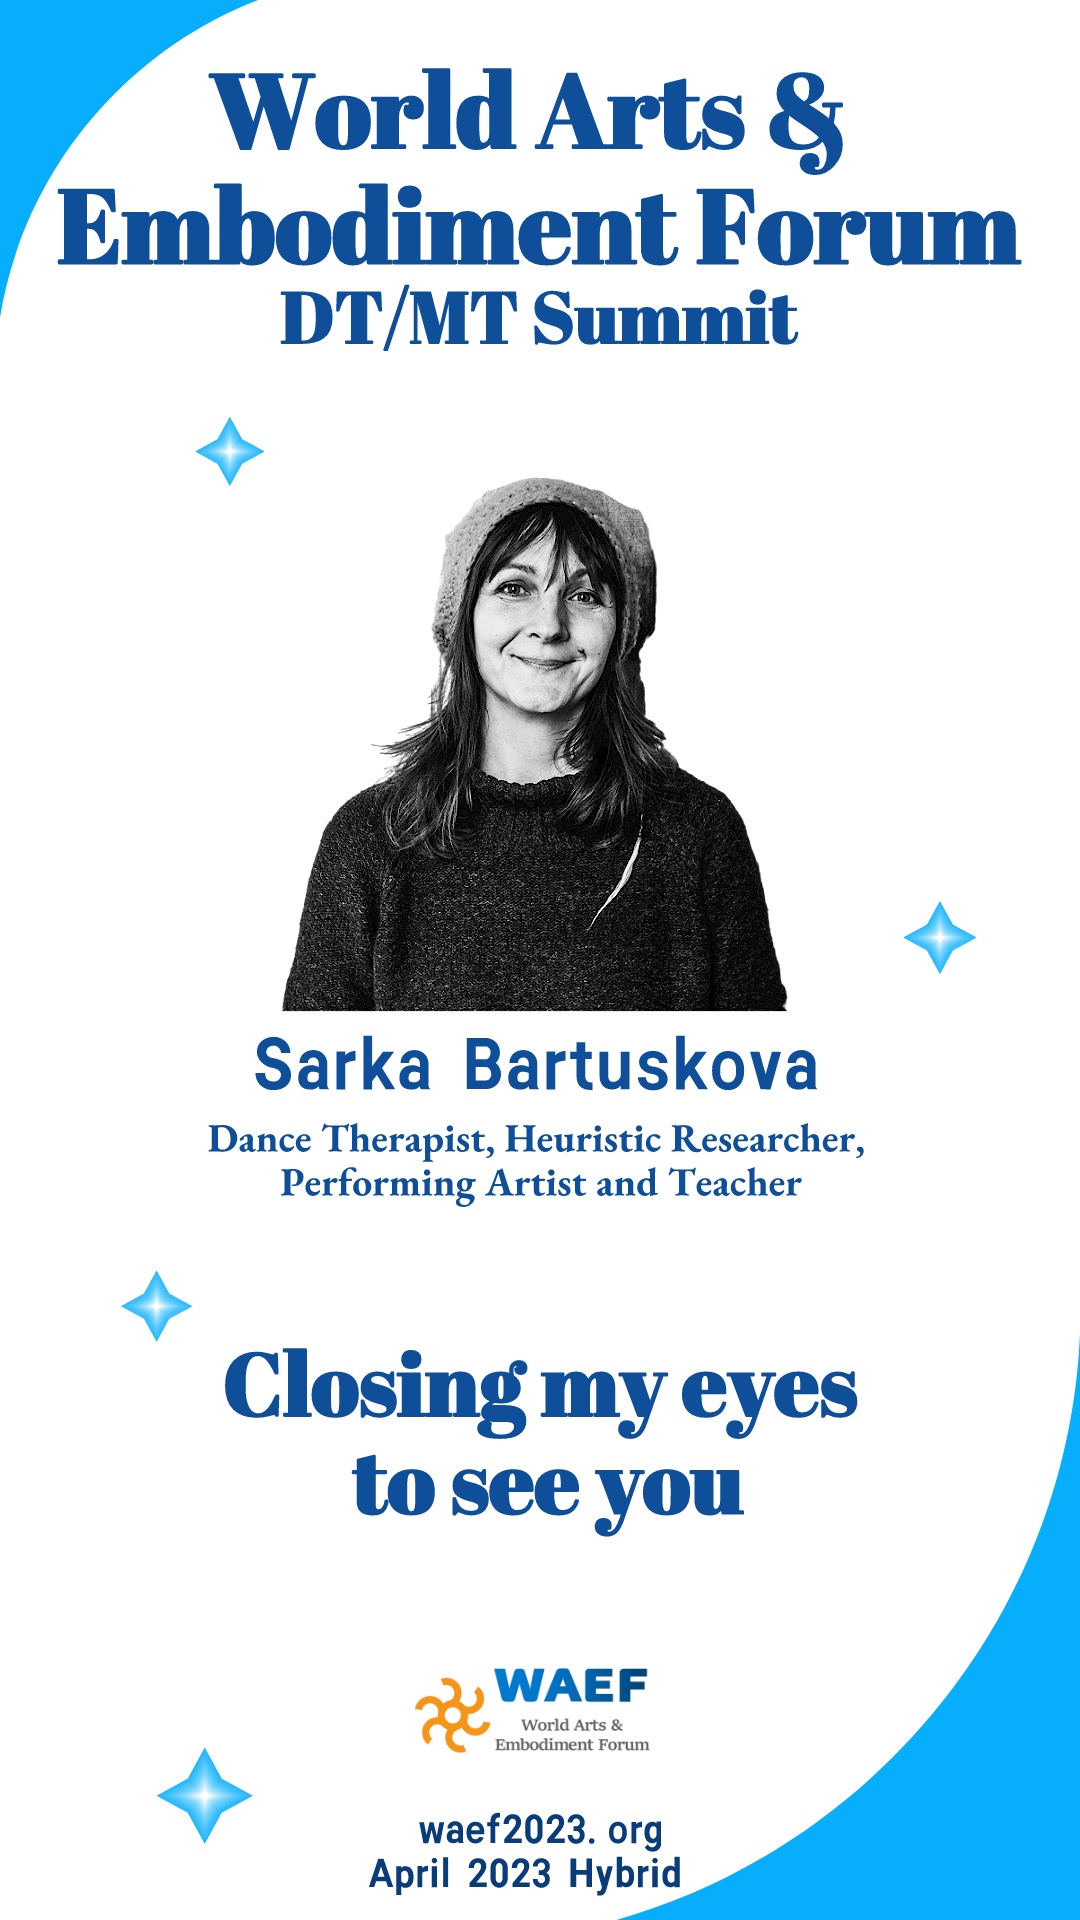 SARKA BARTUSKOVA